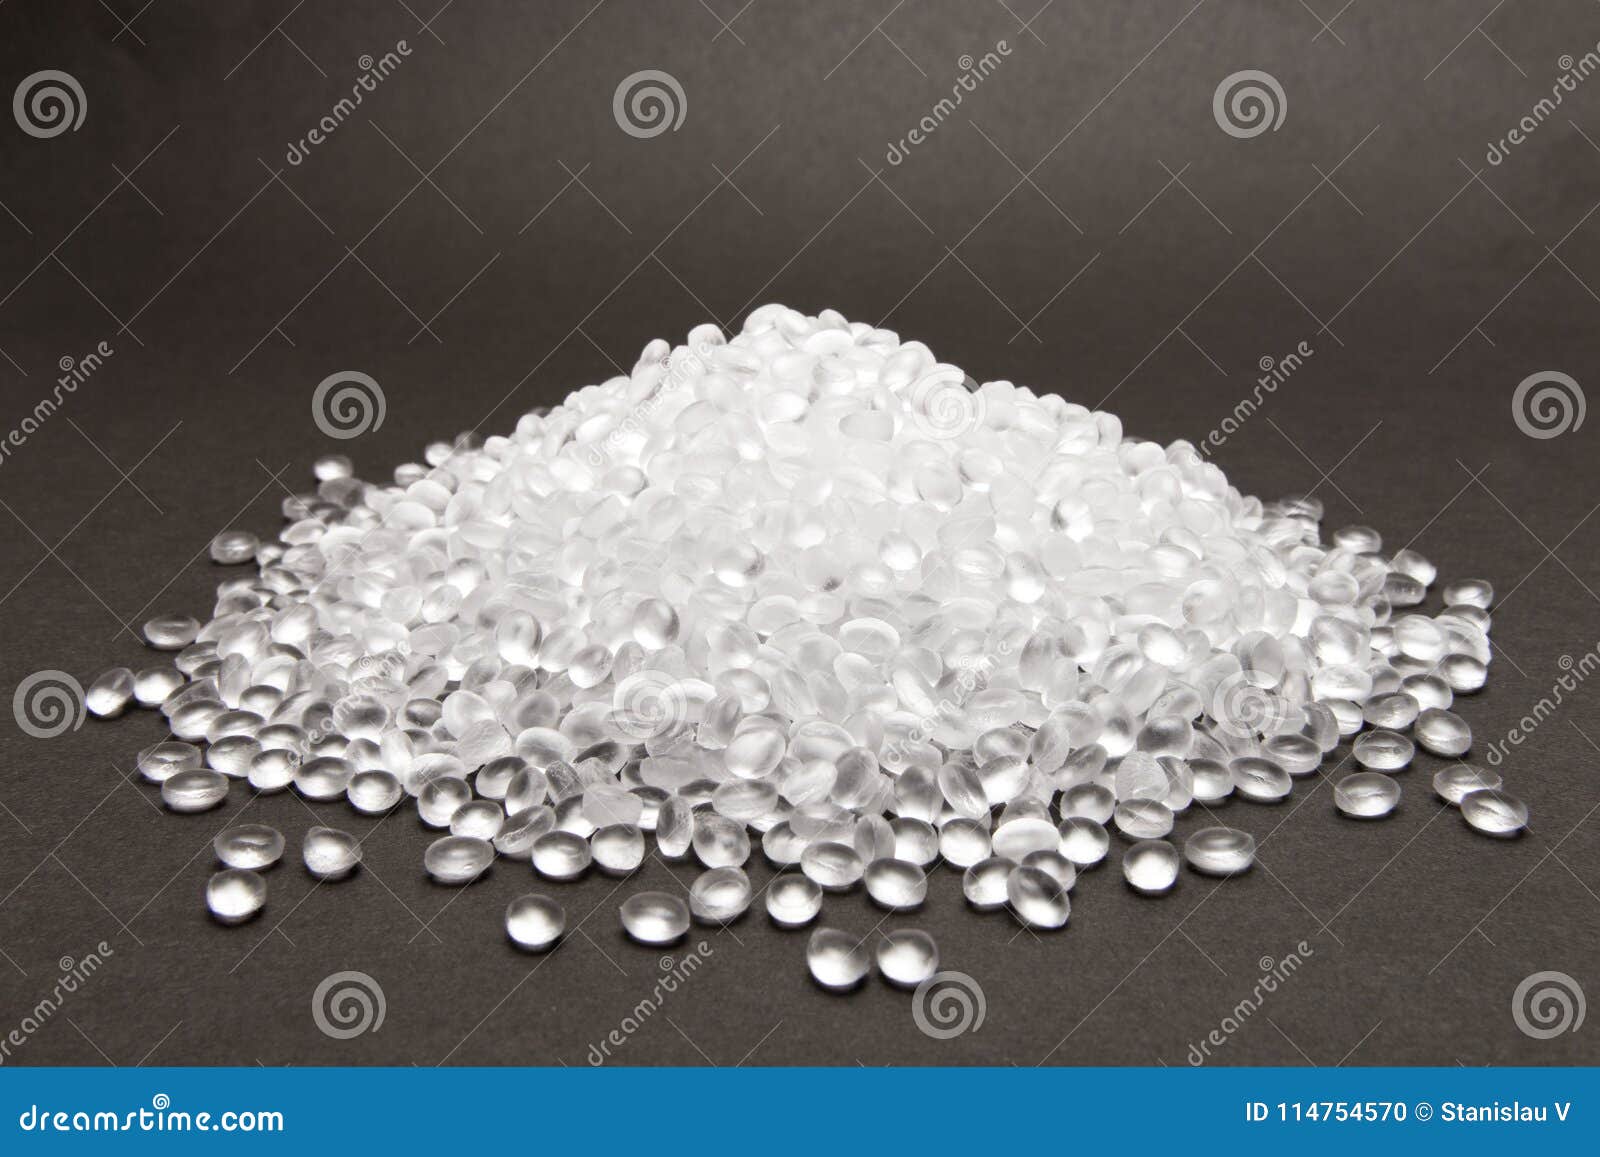 transparent polyethylene granules on dark .hdpe plastic pellets. plastic raw material . idpe.